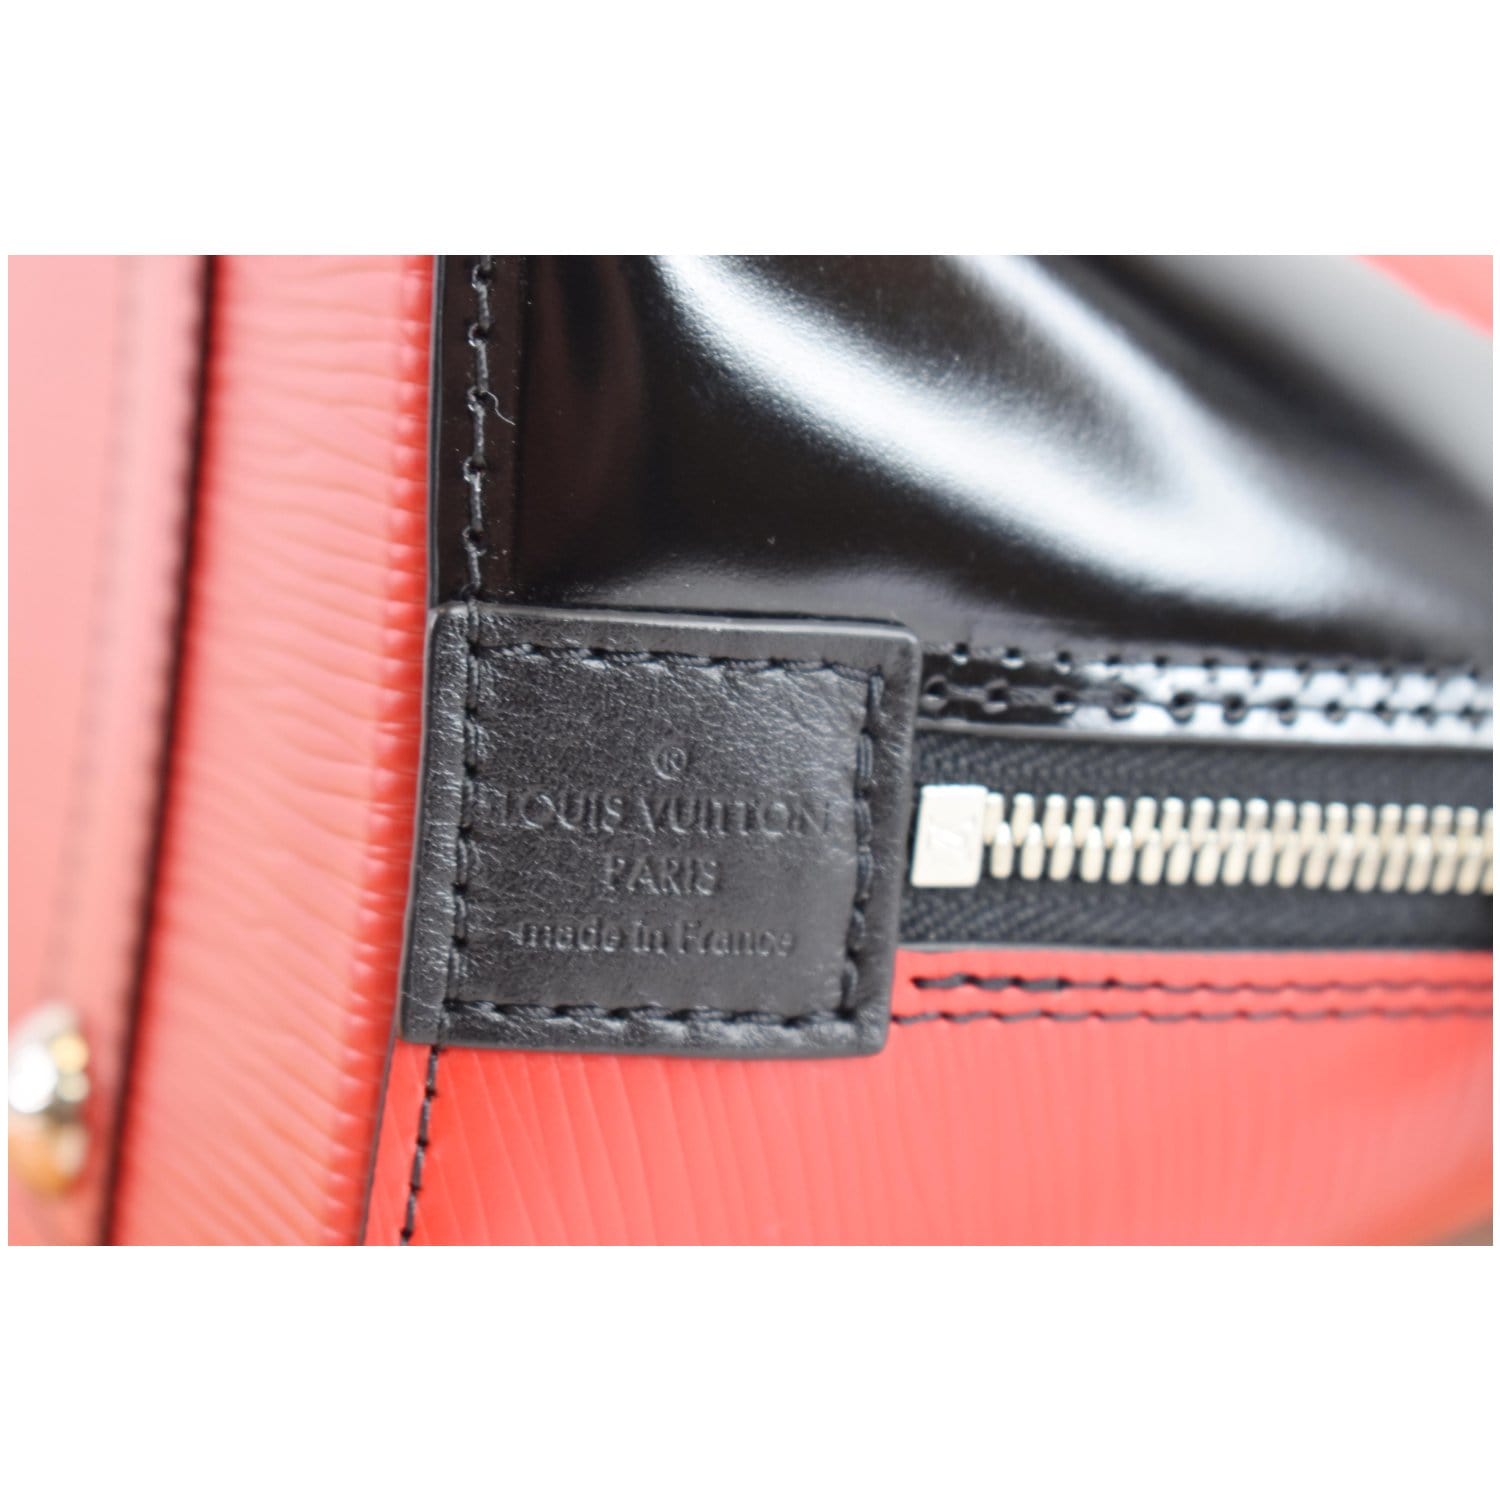 Kabuki leather handbag Louis Vuitton Multicolour in Leather - 20427069